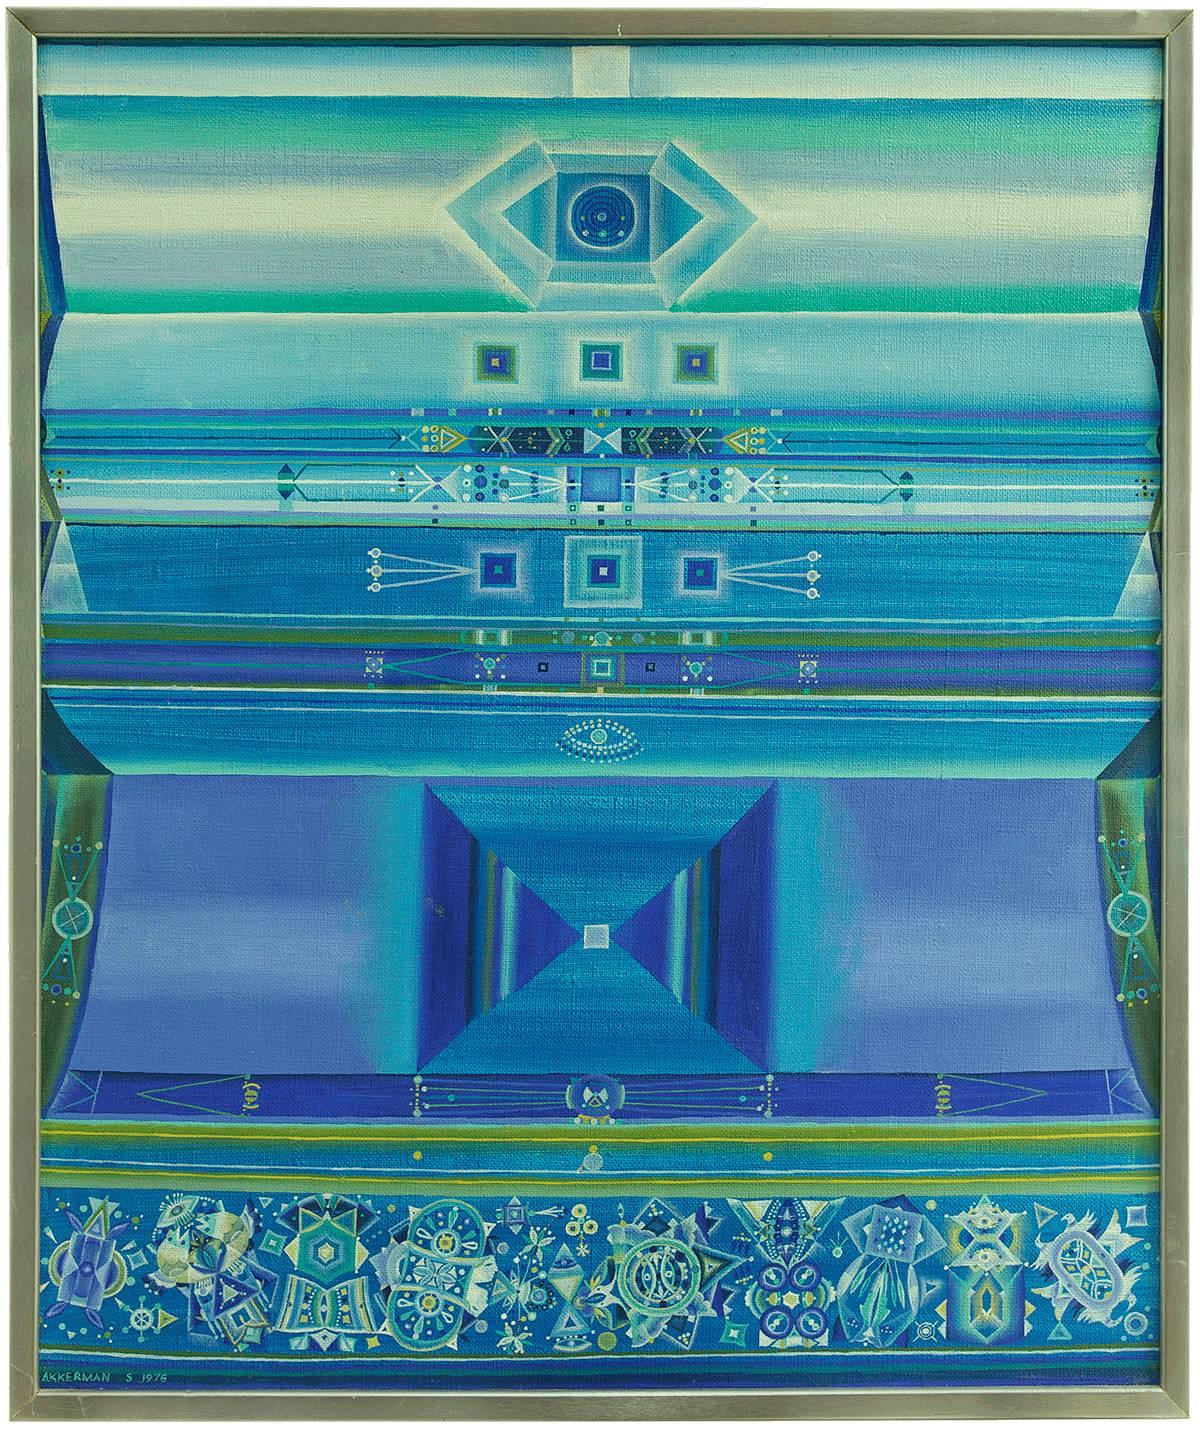 Shmuel Ackerman Abstract Painting - Celestial Fields Post Soviet Avant Garde Russian Israeli Art, Leviathan Group